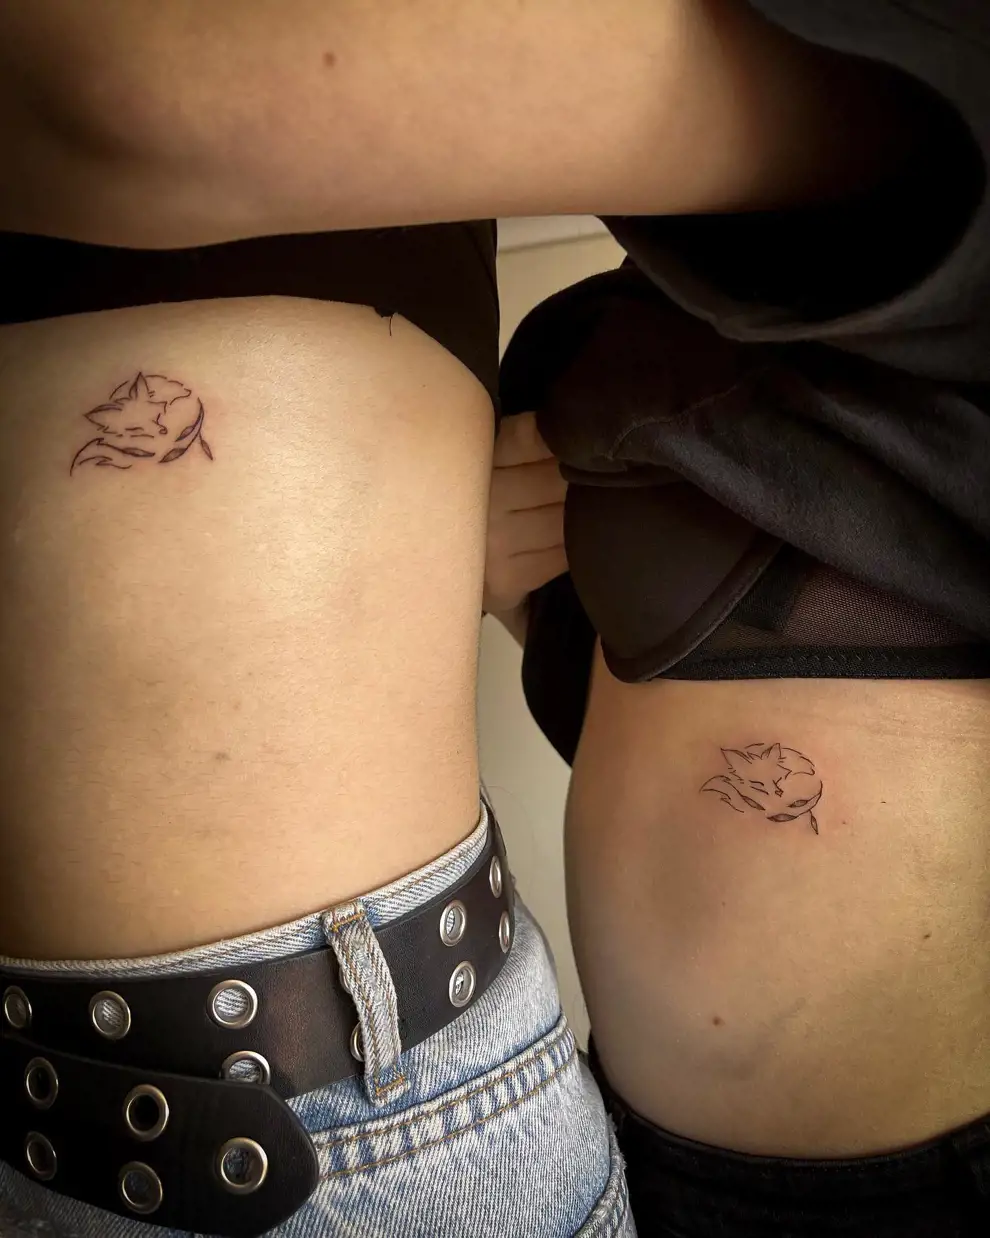 Tatuajes para amigas: zorro